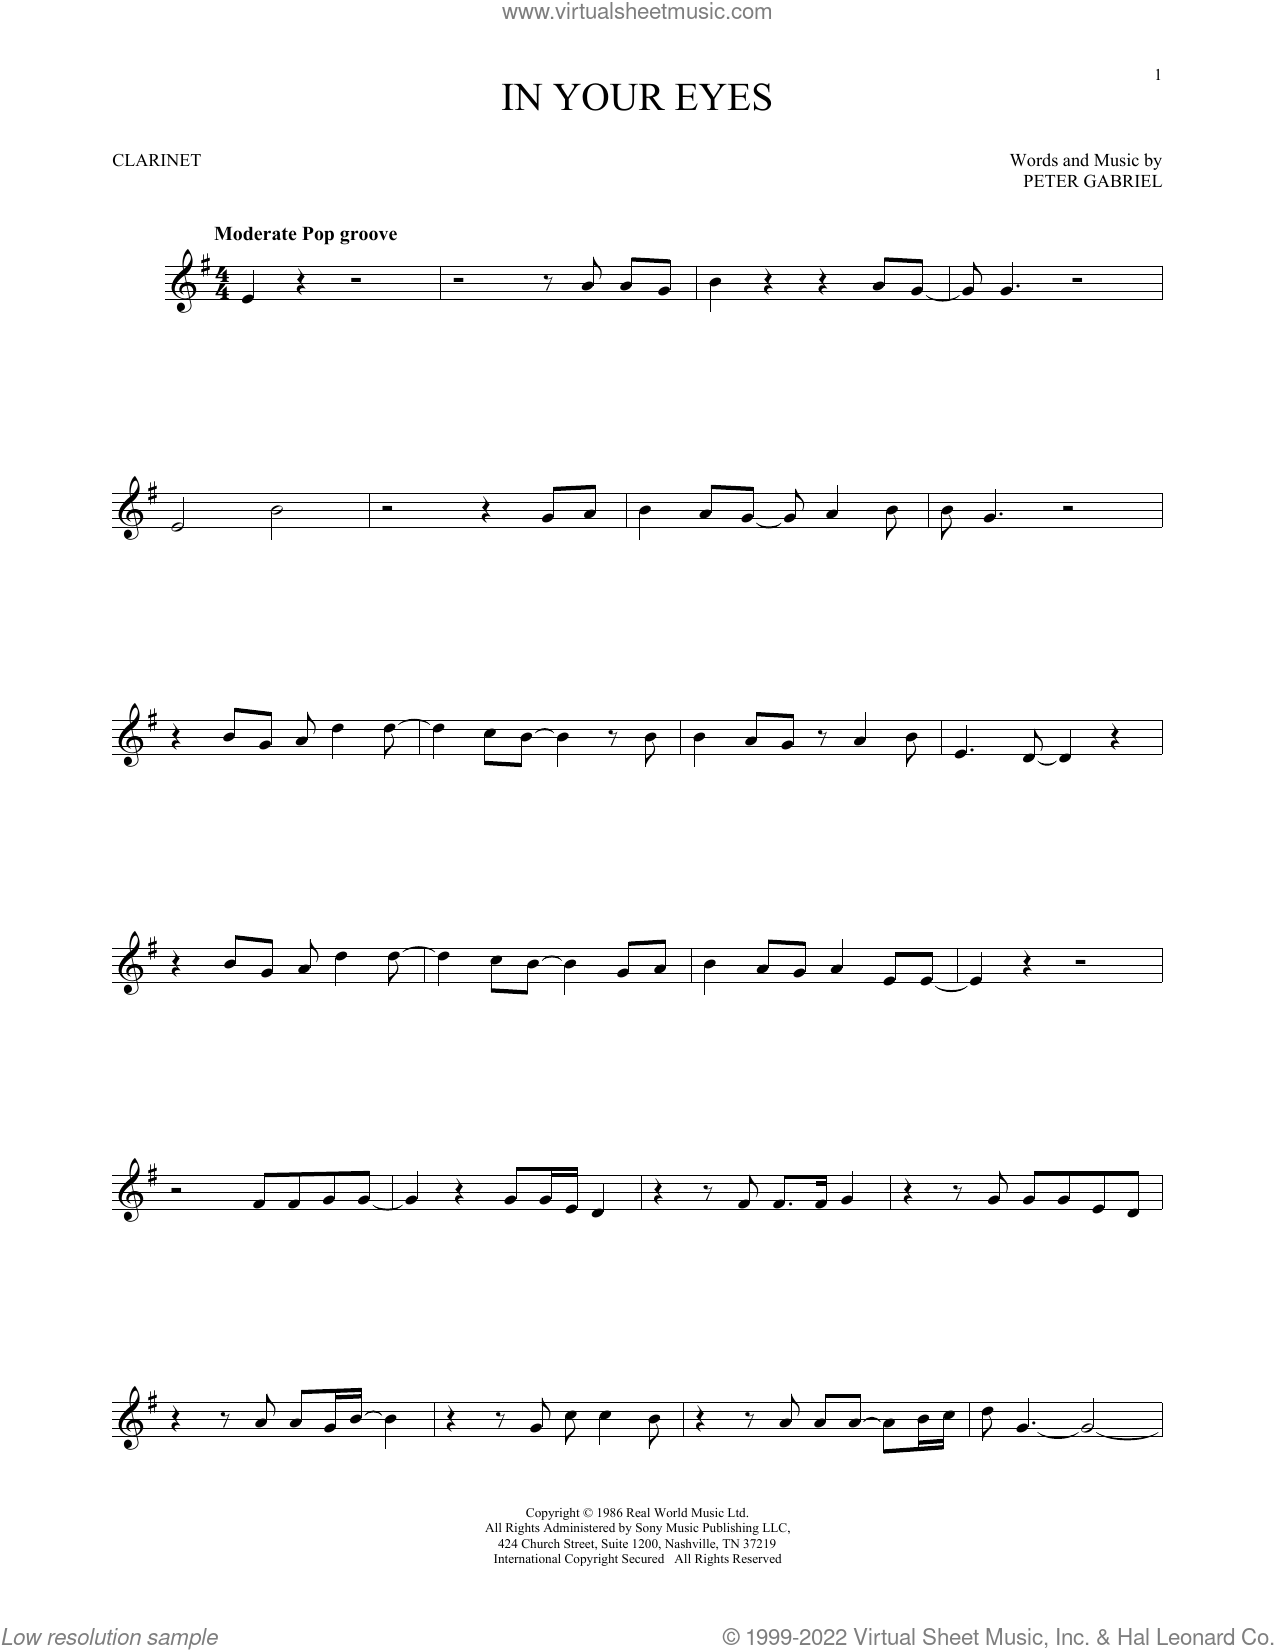 clarinet sheet music for popular songs